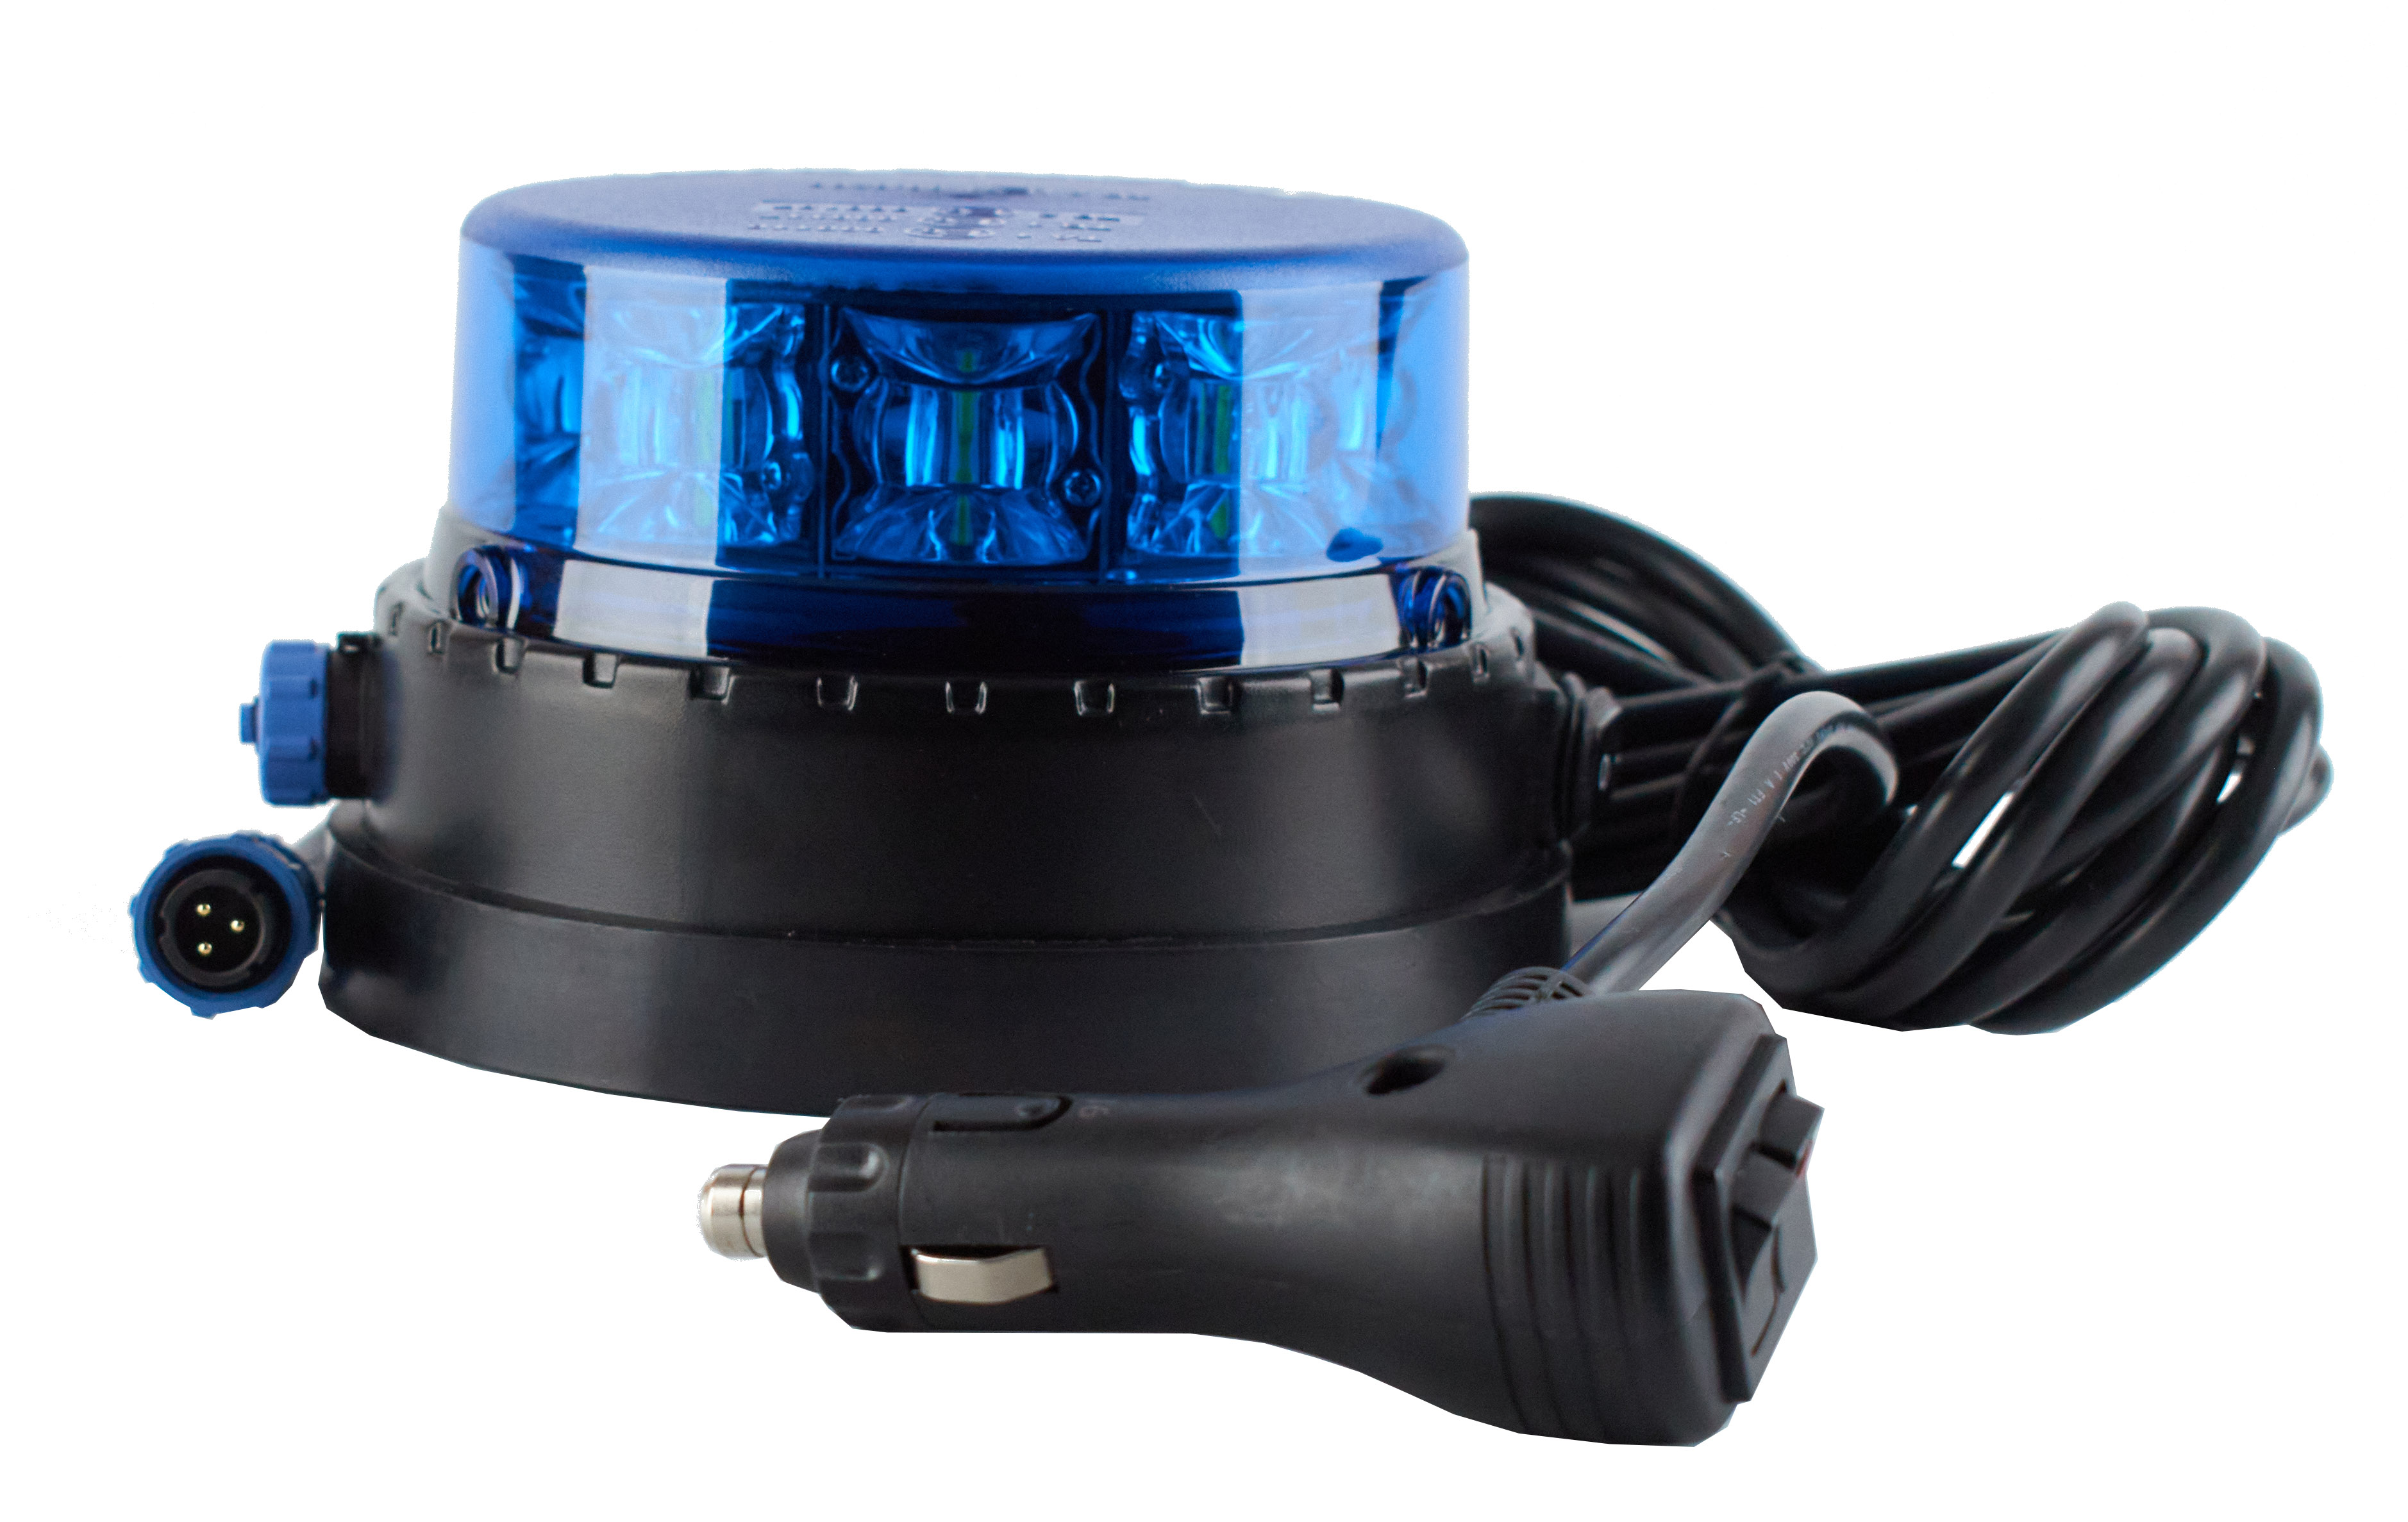 JB systems LED Police Light gyrophare bleu